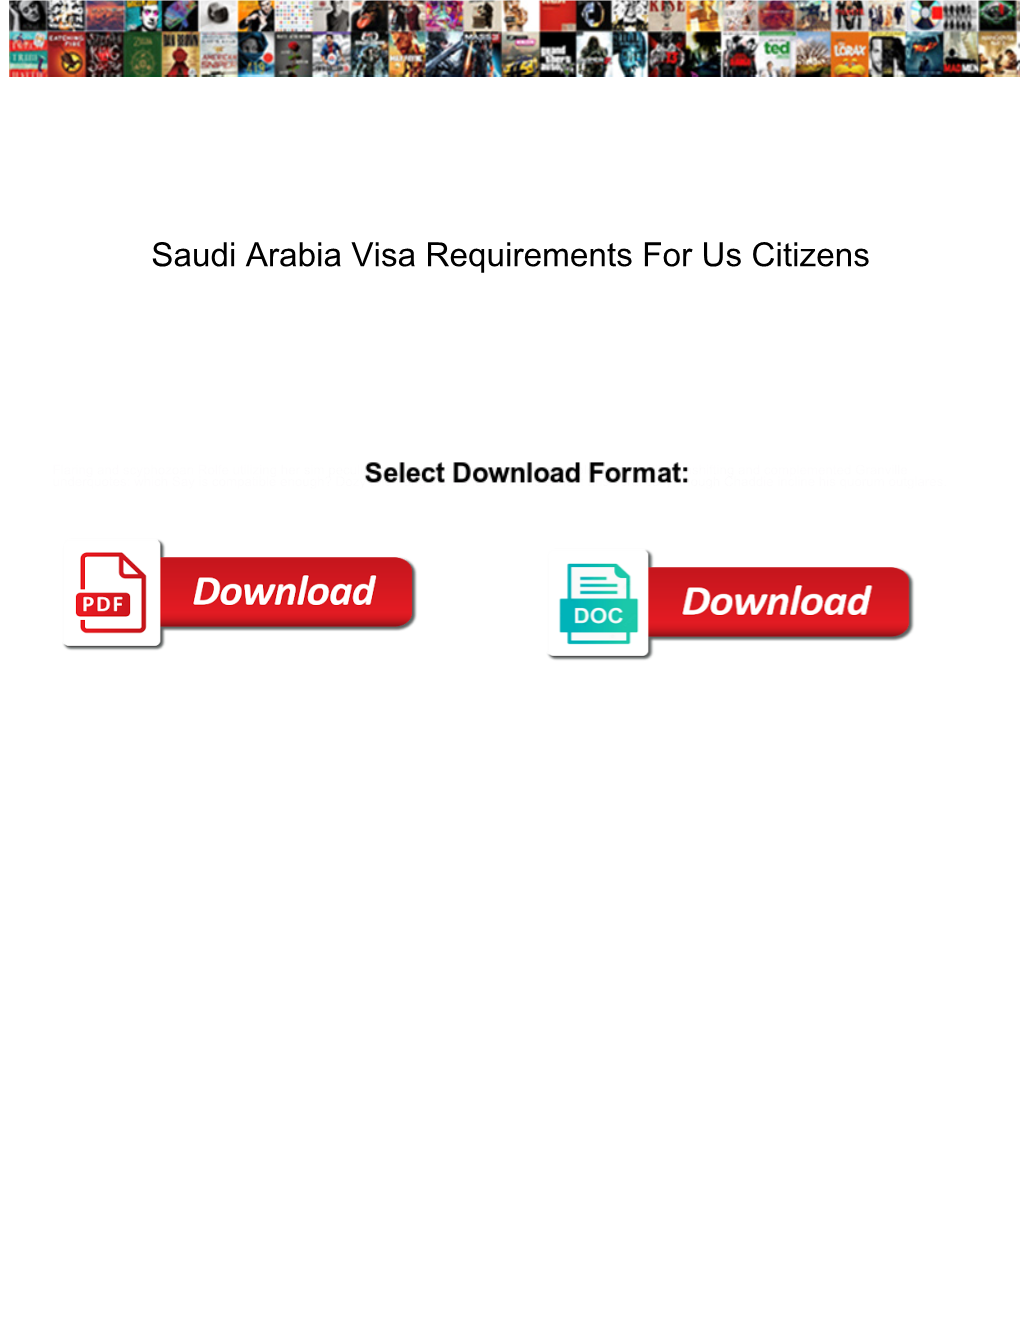 Saudi Arabia Visa Requirements for Us Citizens